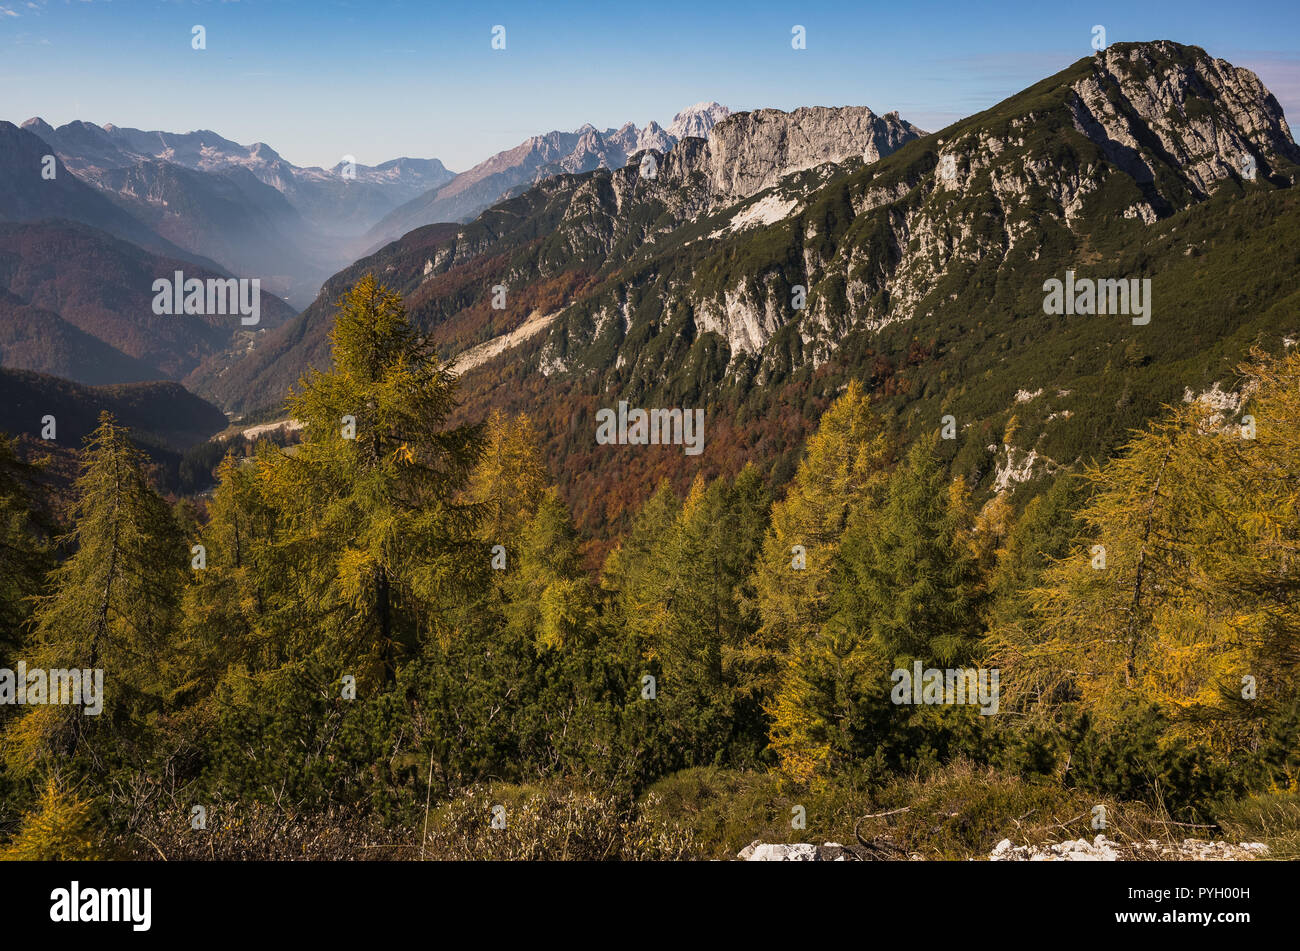 Vista panoramica dal Mangart passano in Slovenia Alpi. Foto Stock